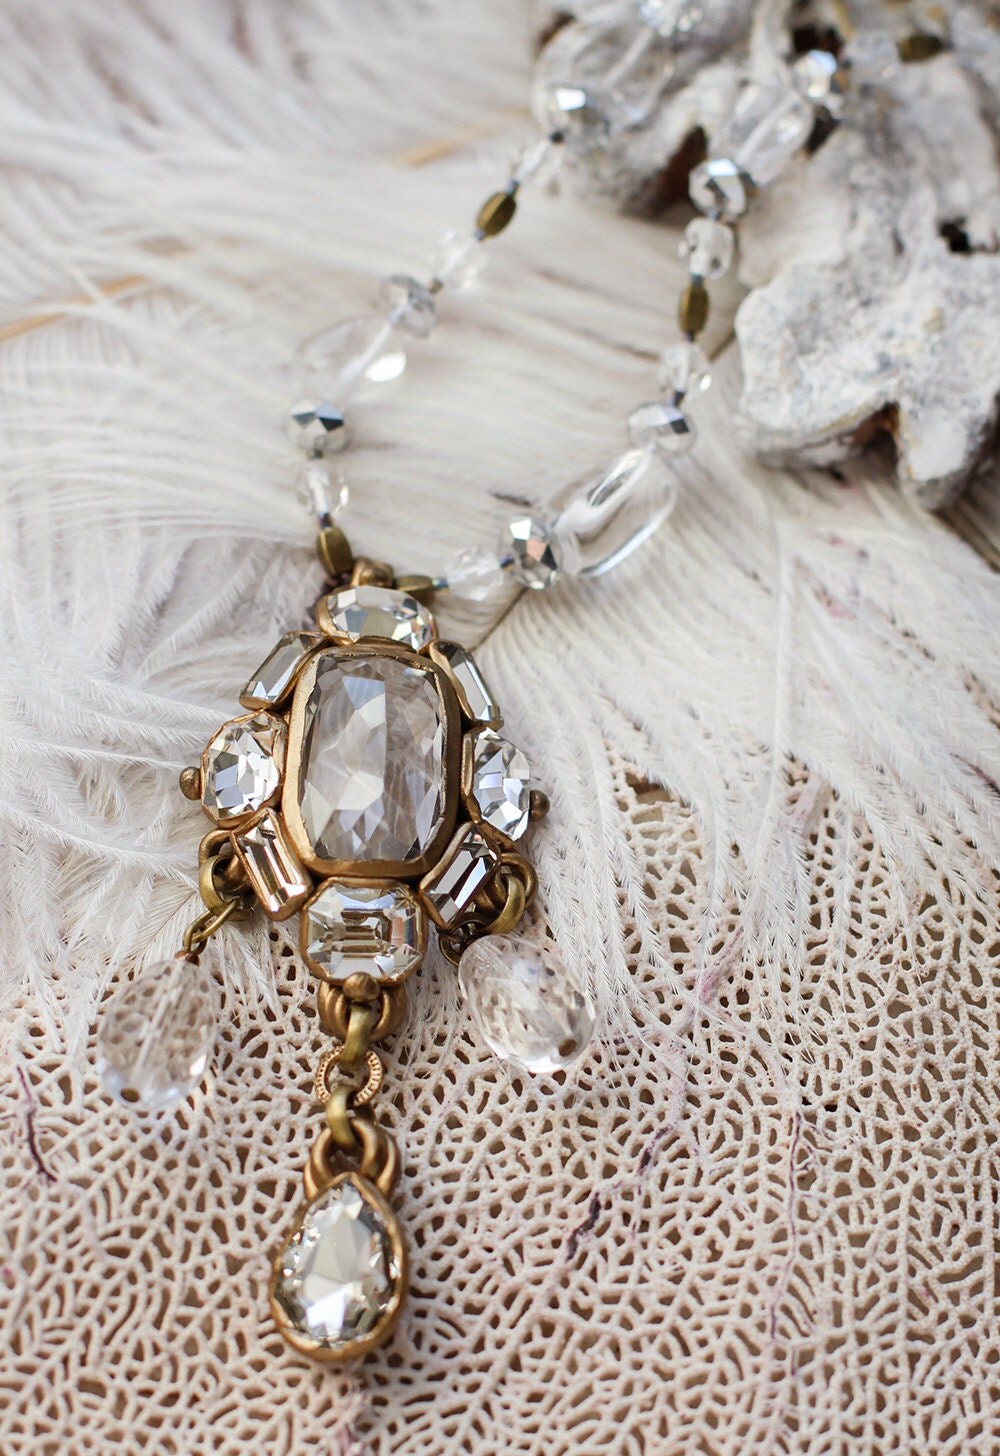 Pale smoky quartz and crystal rhinestone necklace/ pendant